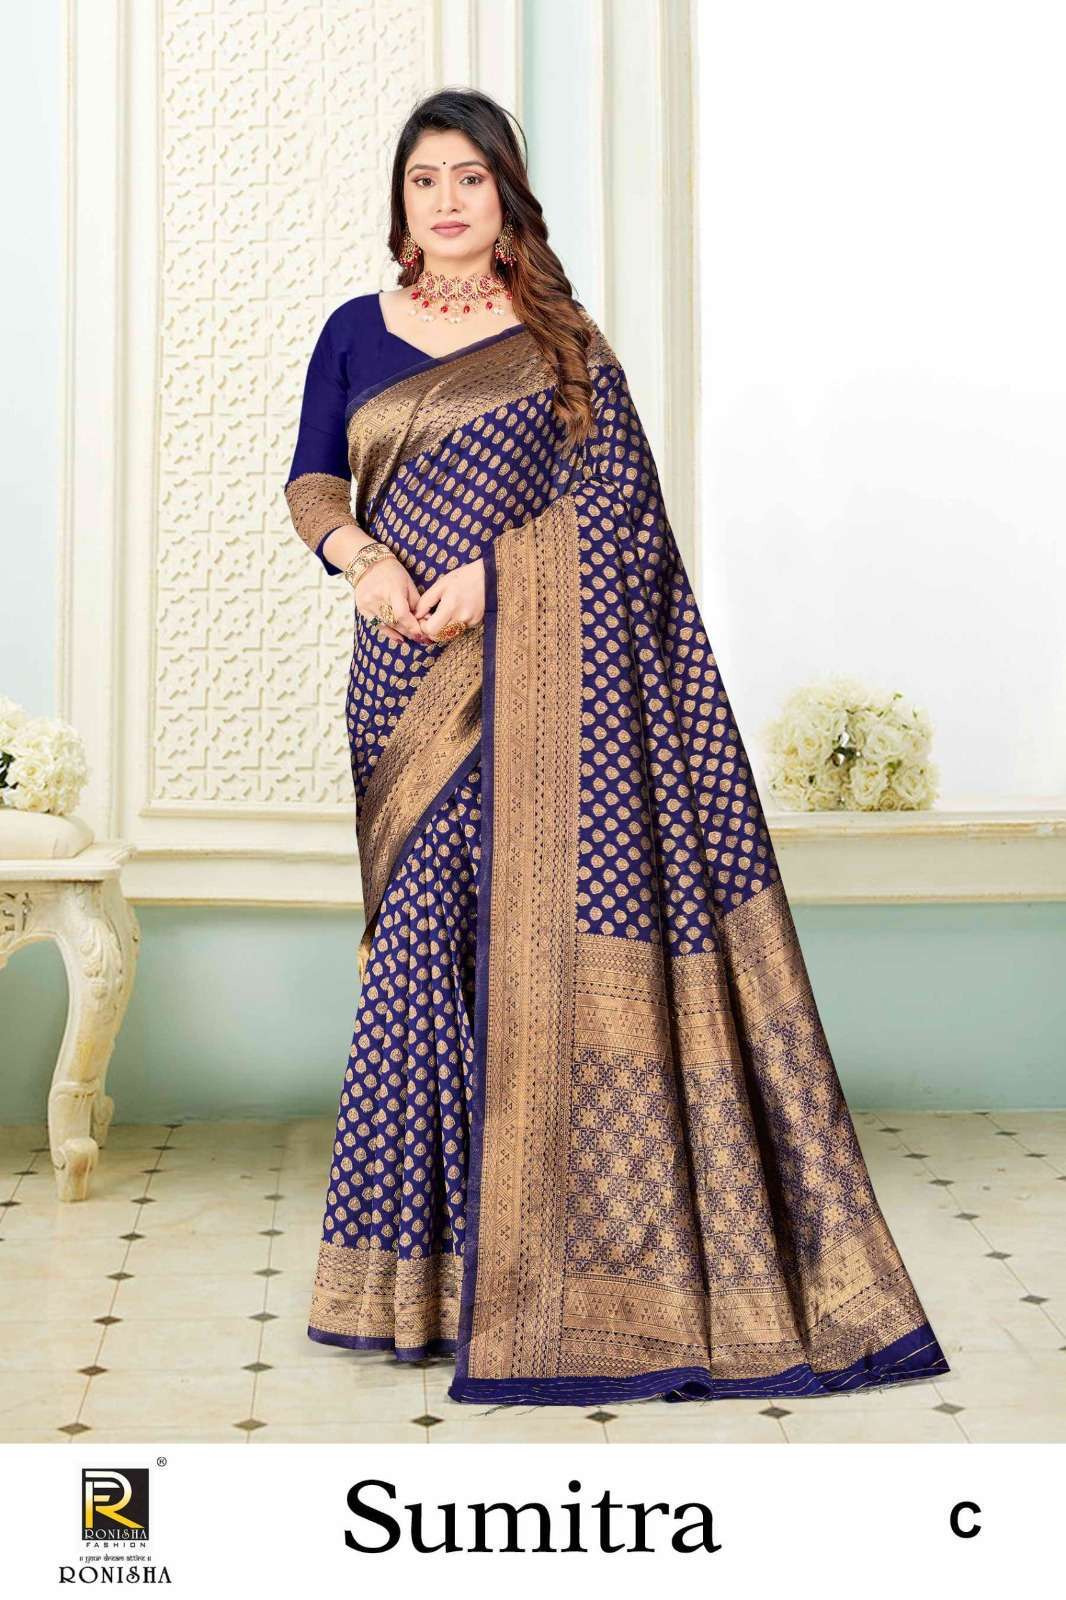 Ronisha Sumitra Banarasi Silk Saree bulk order